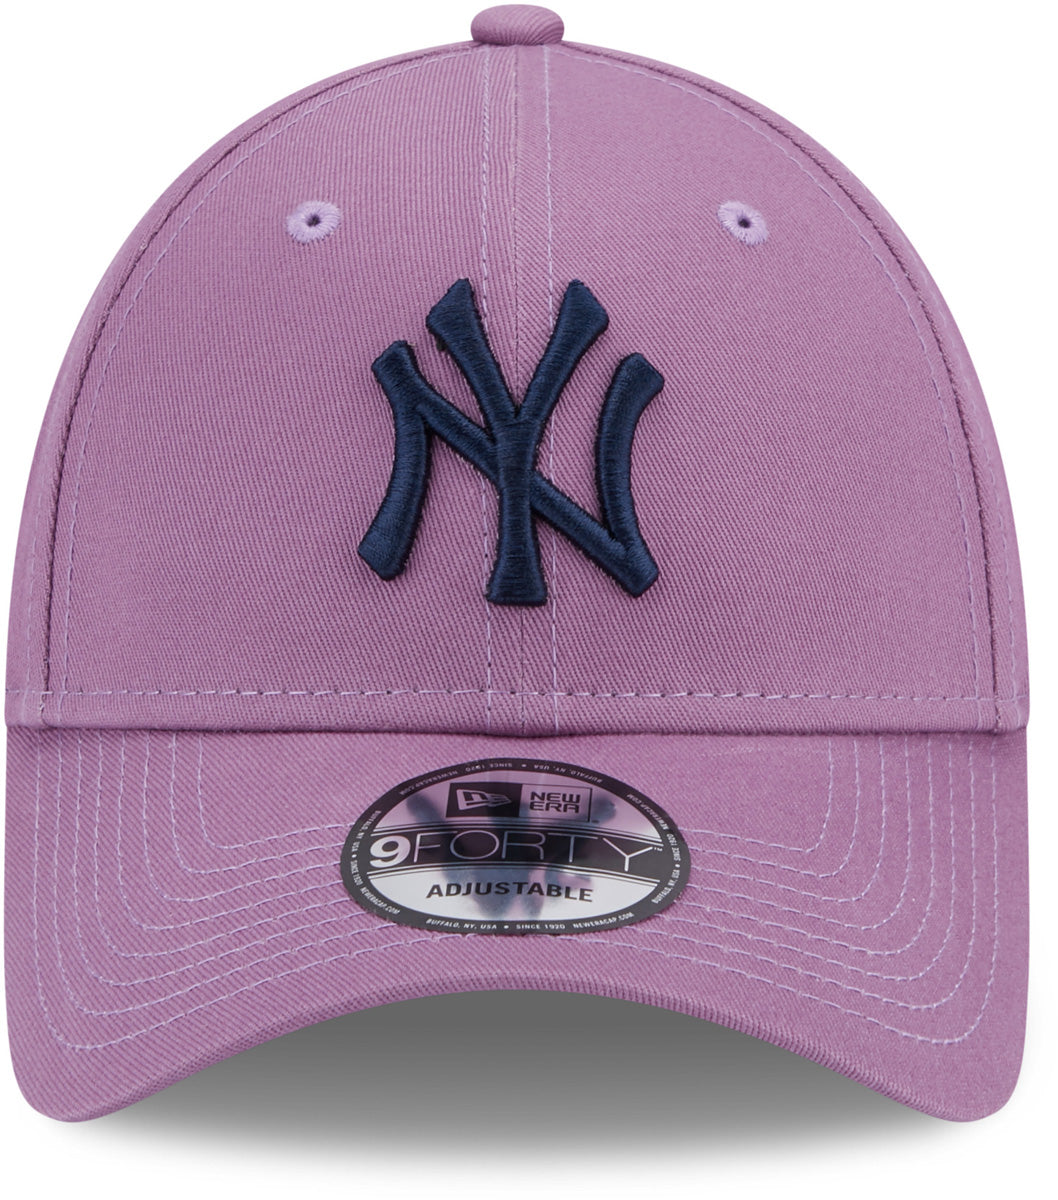 New era New York Yankees MLB 9Forty League Essential Cap